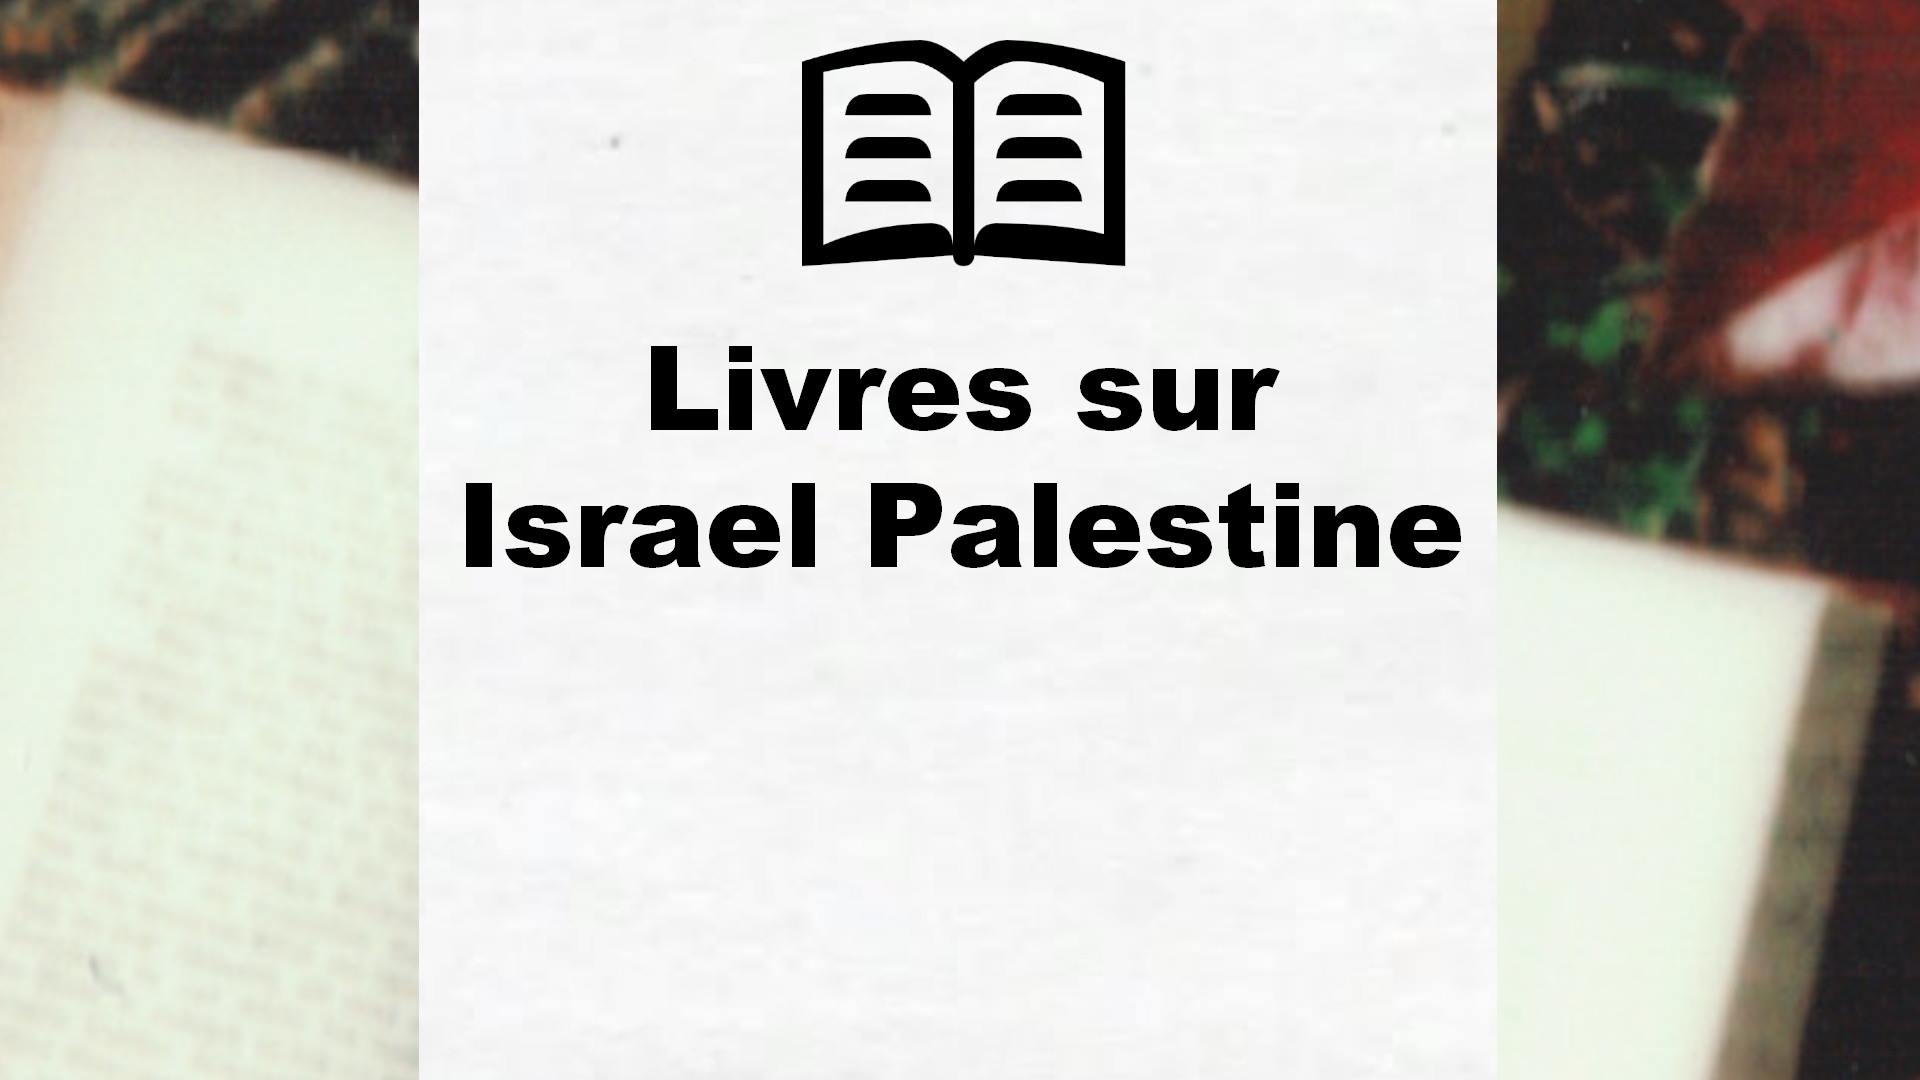 Livres sur Israel Palestine